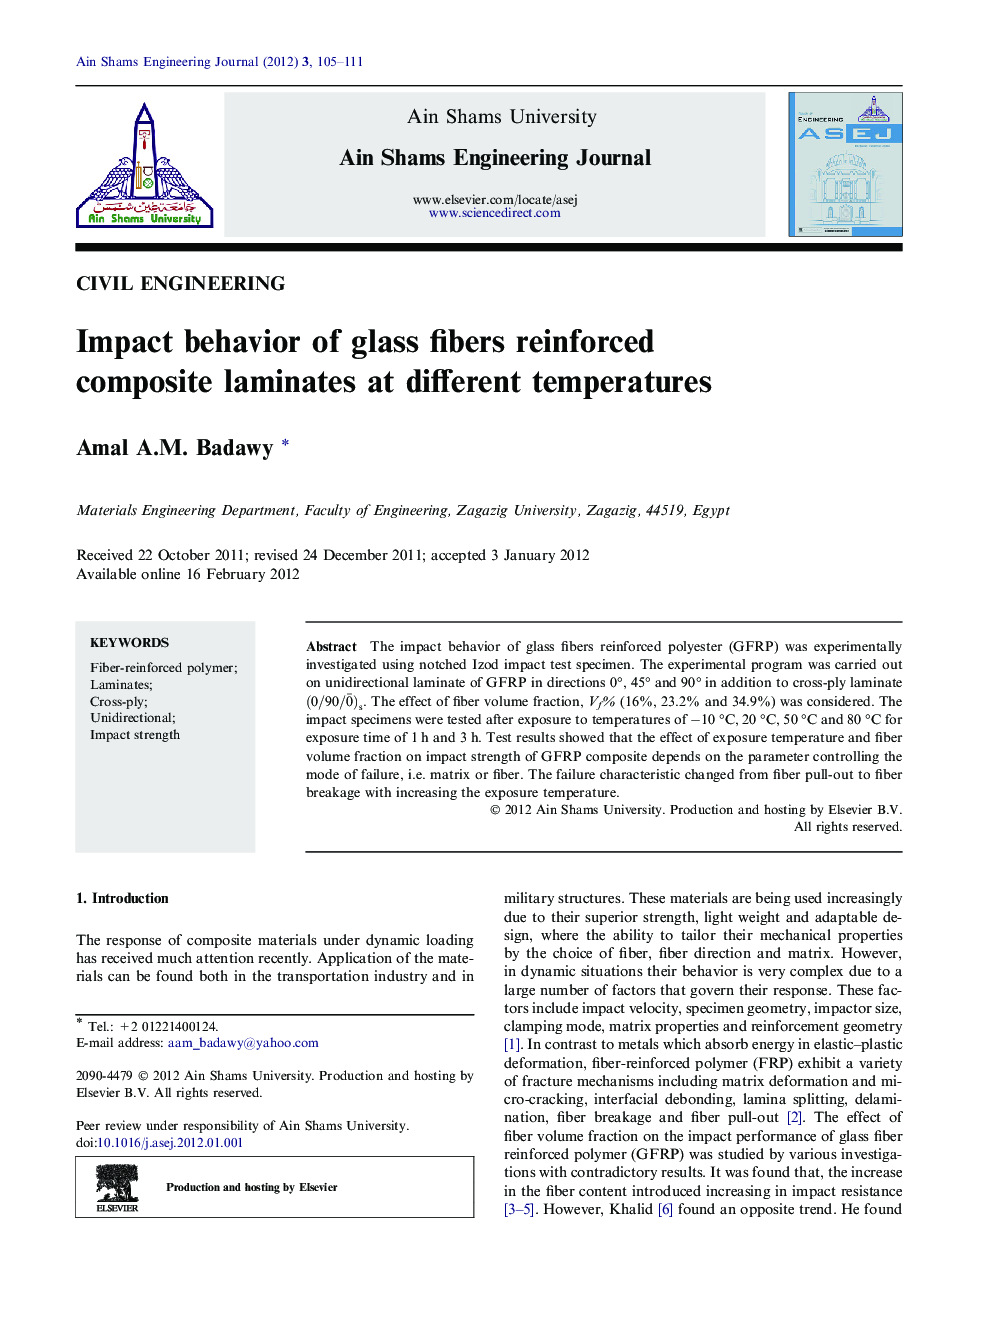 Impact behavior of glass fibers reinforced composite laminates at different temperatures